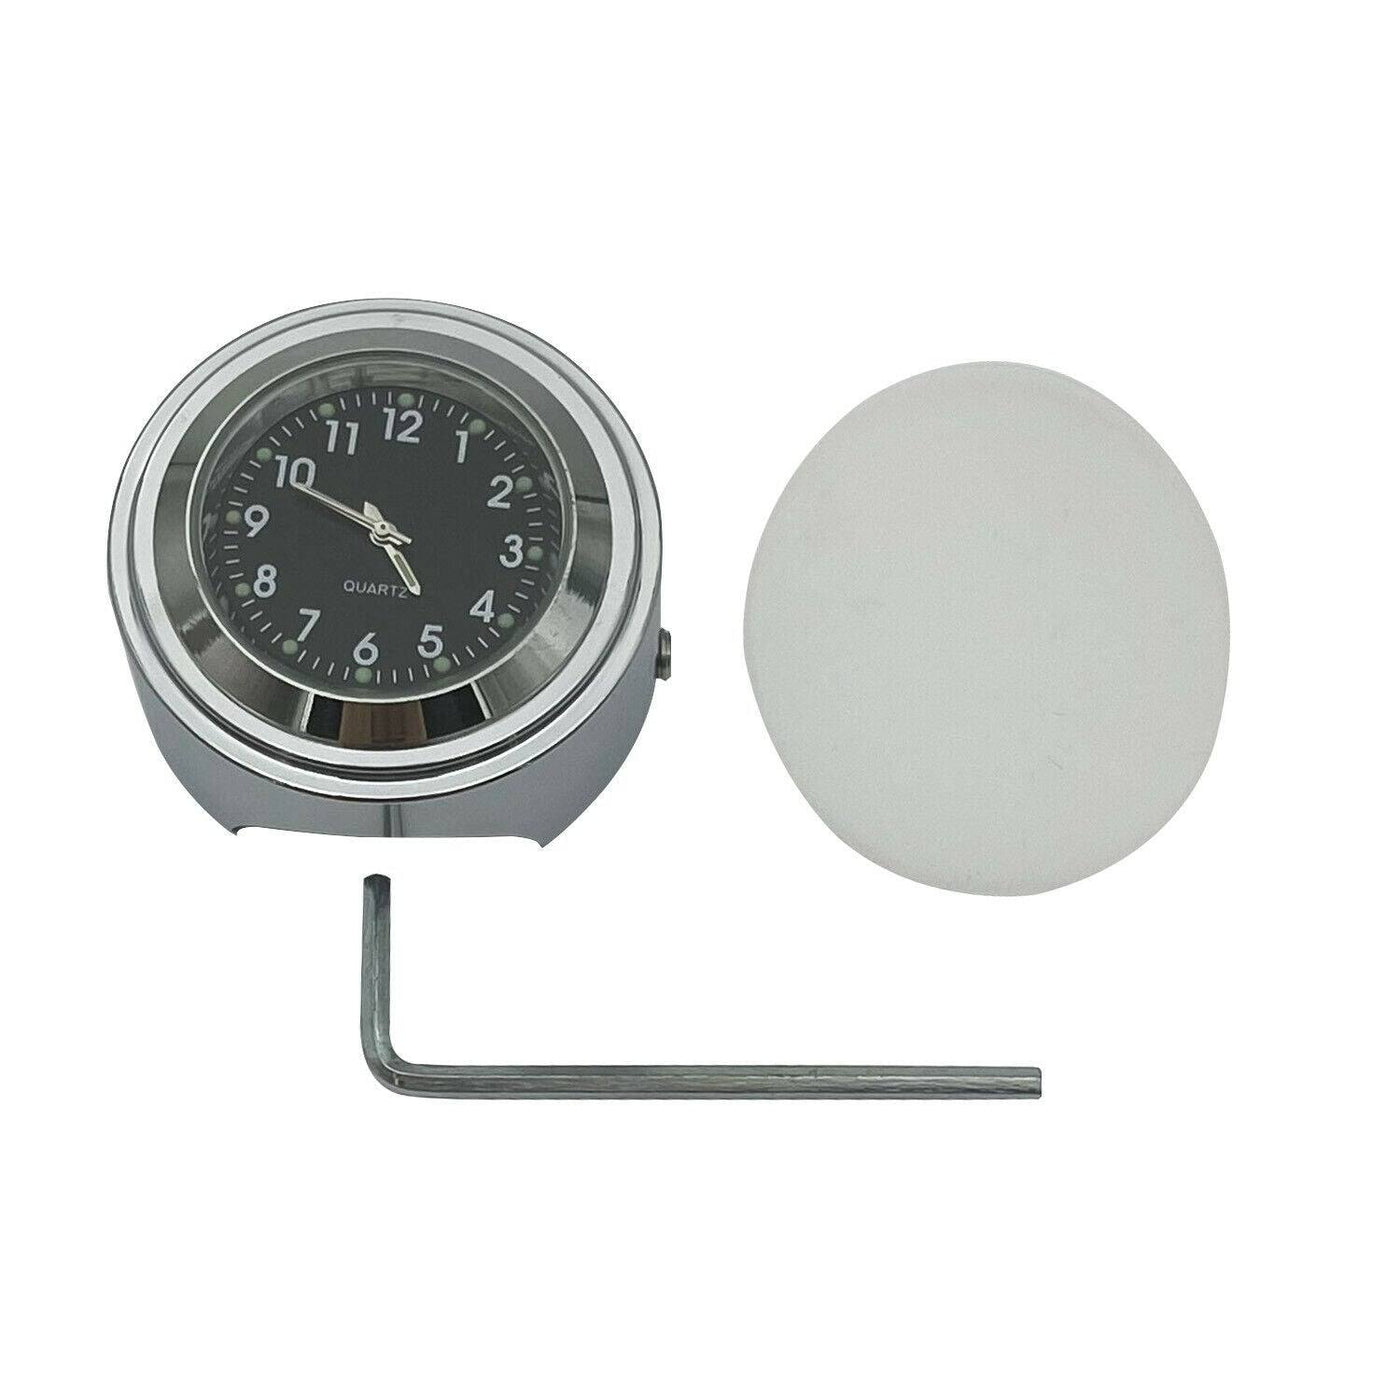 7/8“ Motorcycle Handlebar Clock & Thermometer Fit For Harley Honda Yamaha Suzuki - Moto Life Products